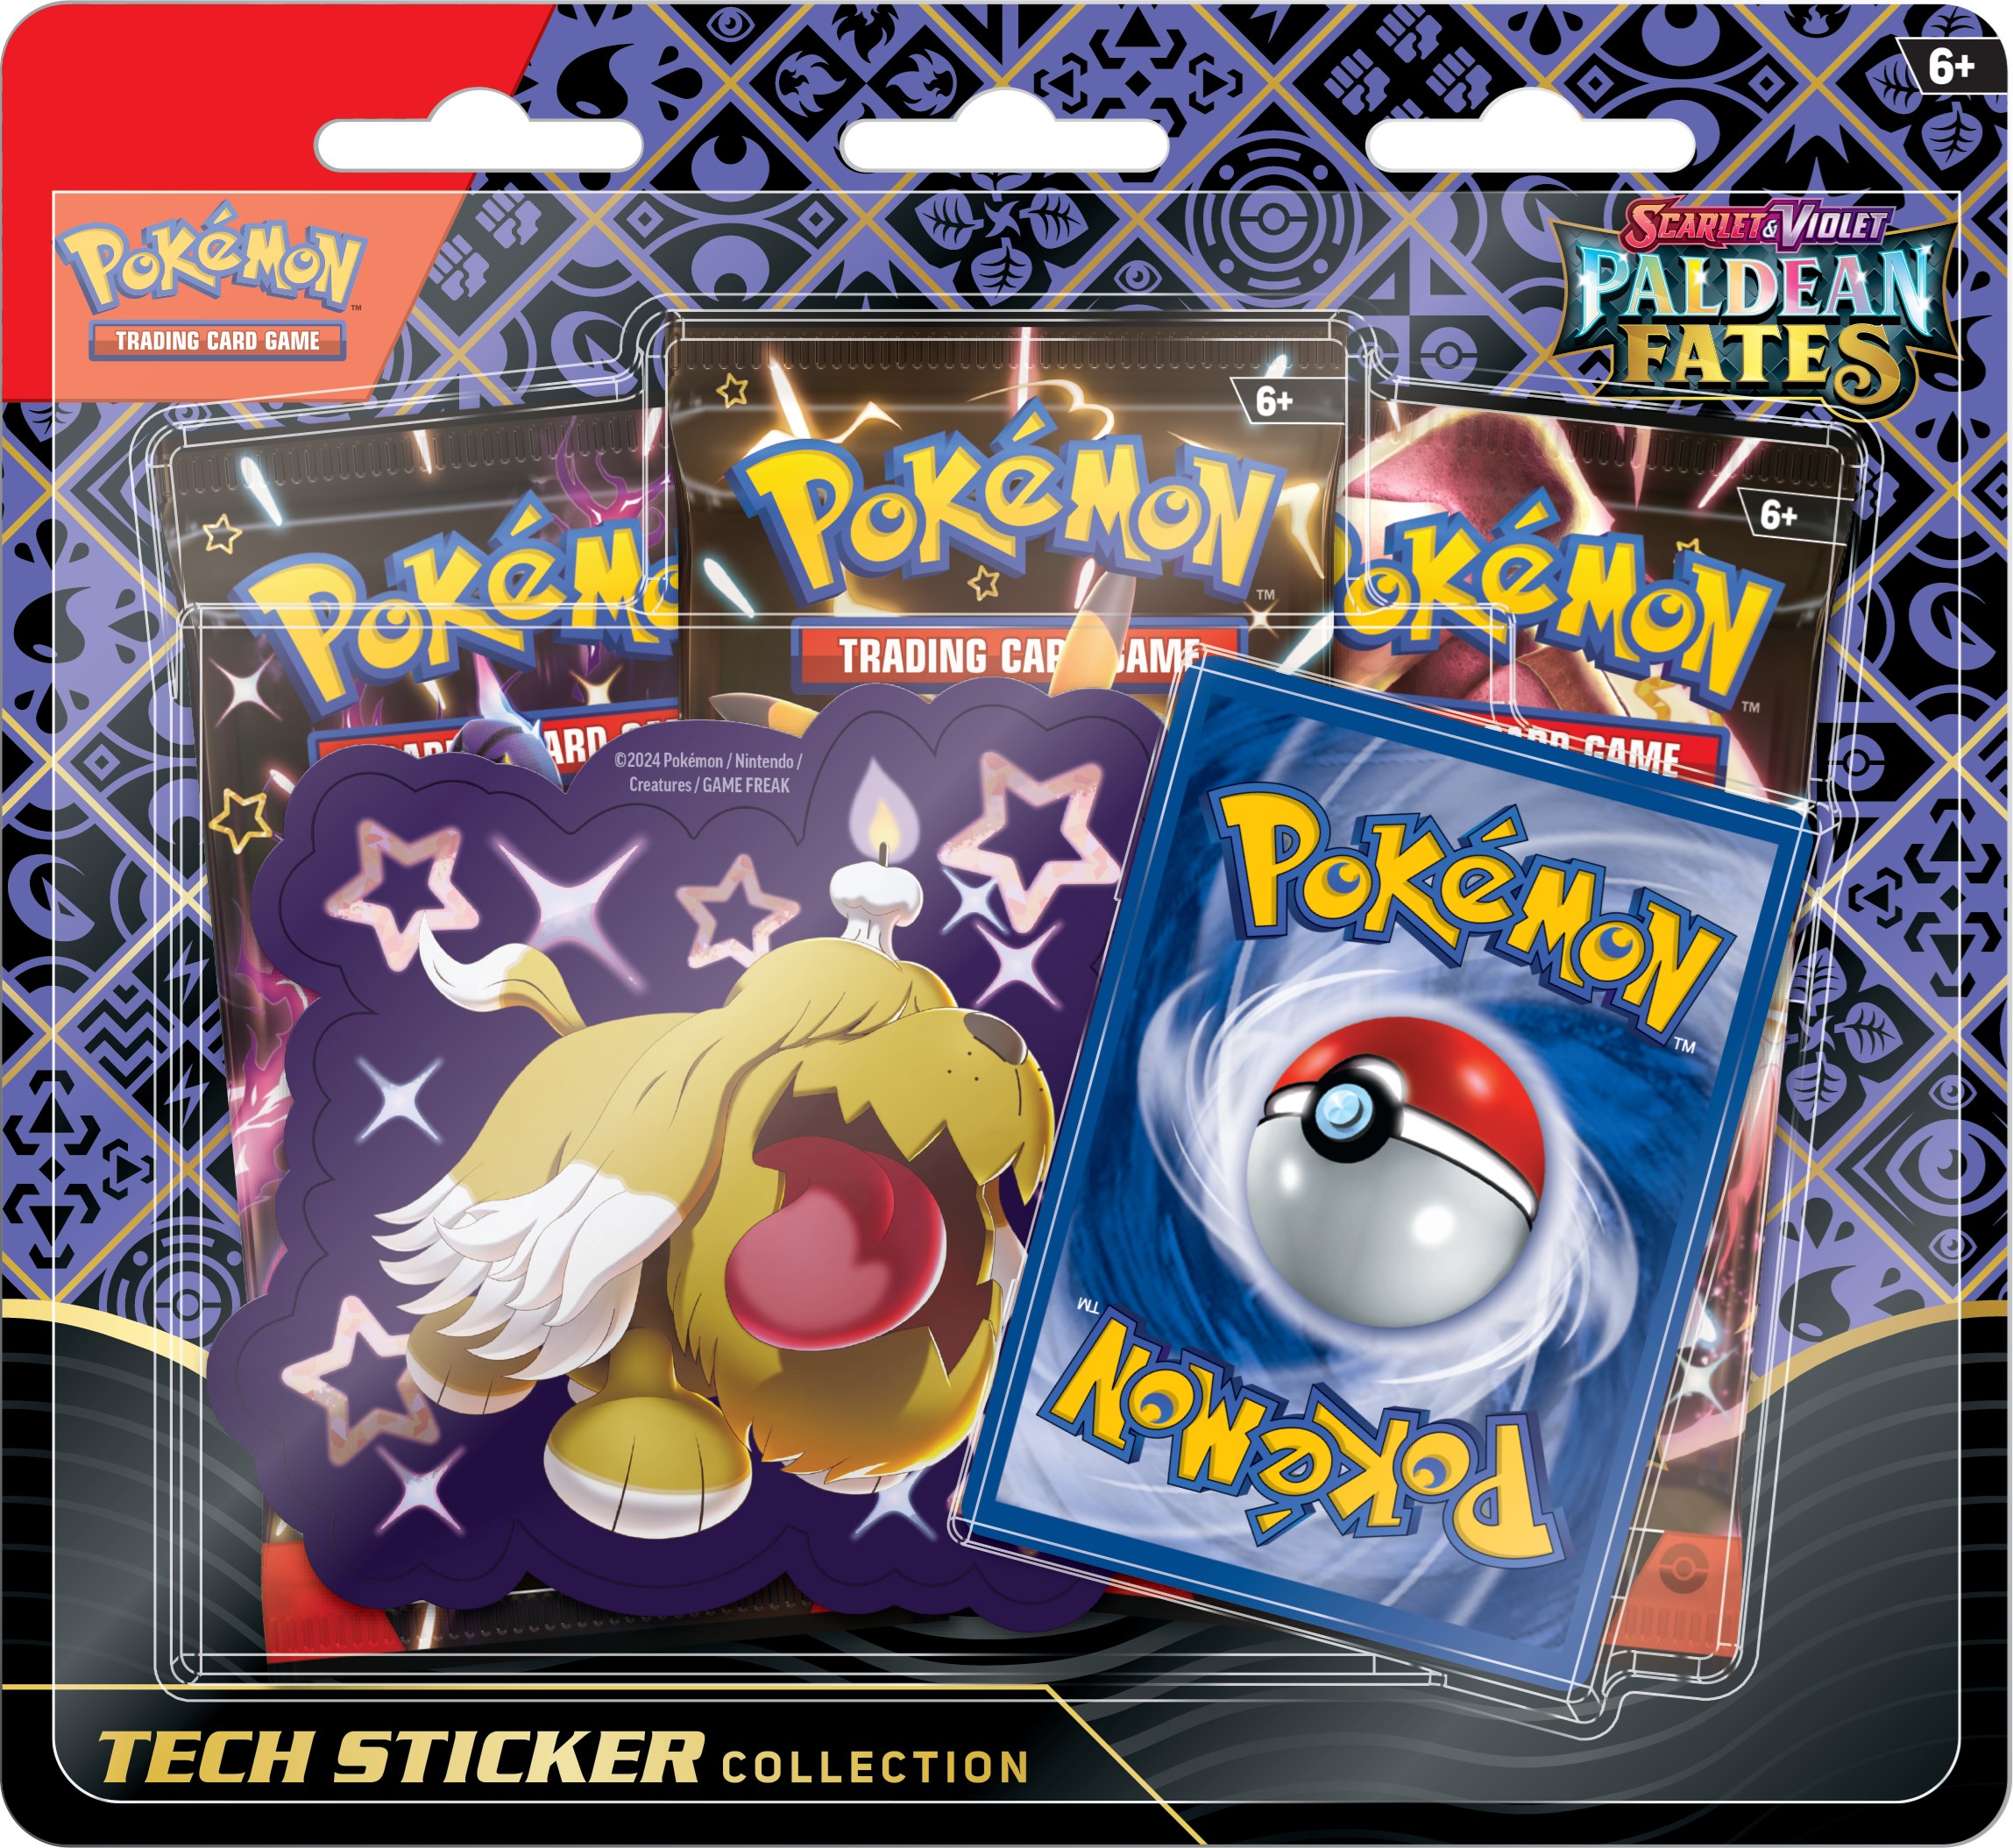 Pokémon TCG Violet Écarlate%E2%80%94Paldean Fates Tech Sticker Collection Greavard png jpgcopy